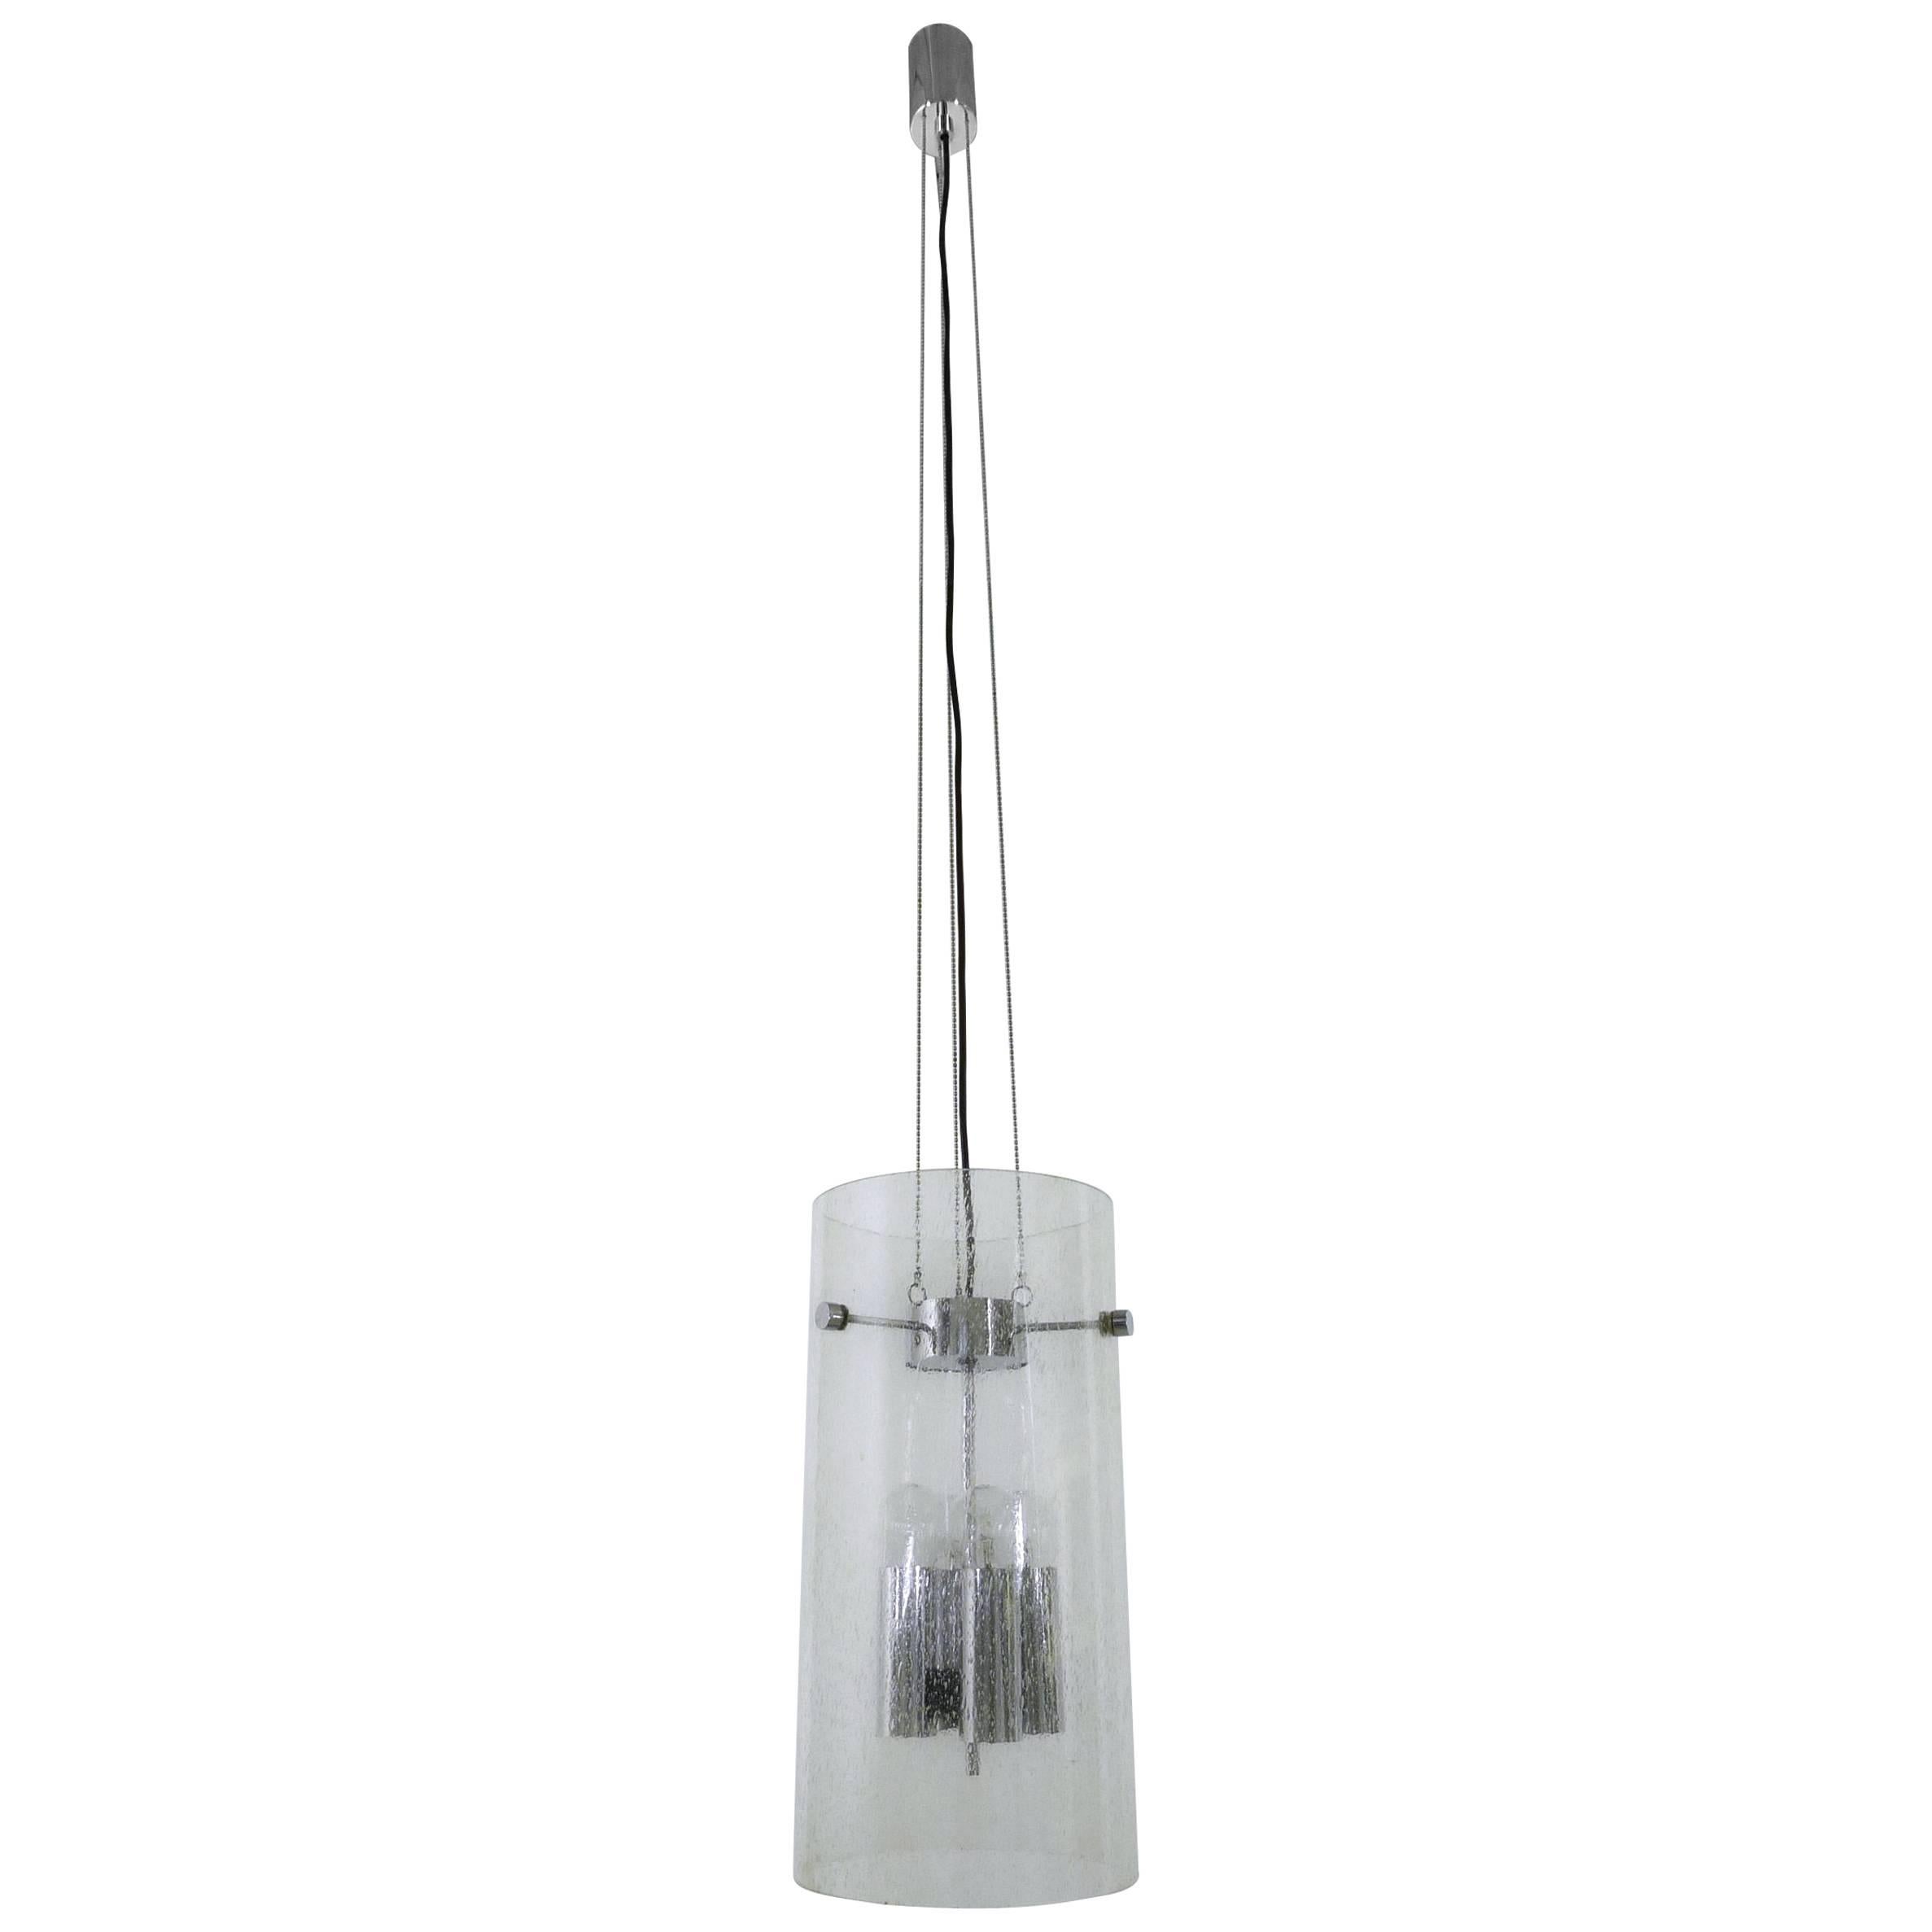 1970s Glass Ceiling Lamp from Glashütte Limburg, Germany For Sale